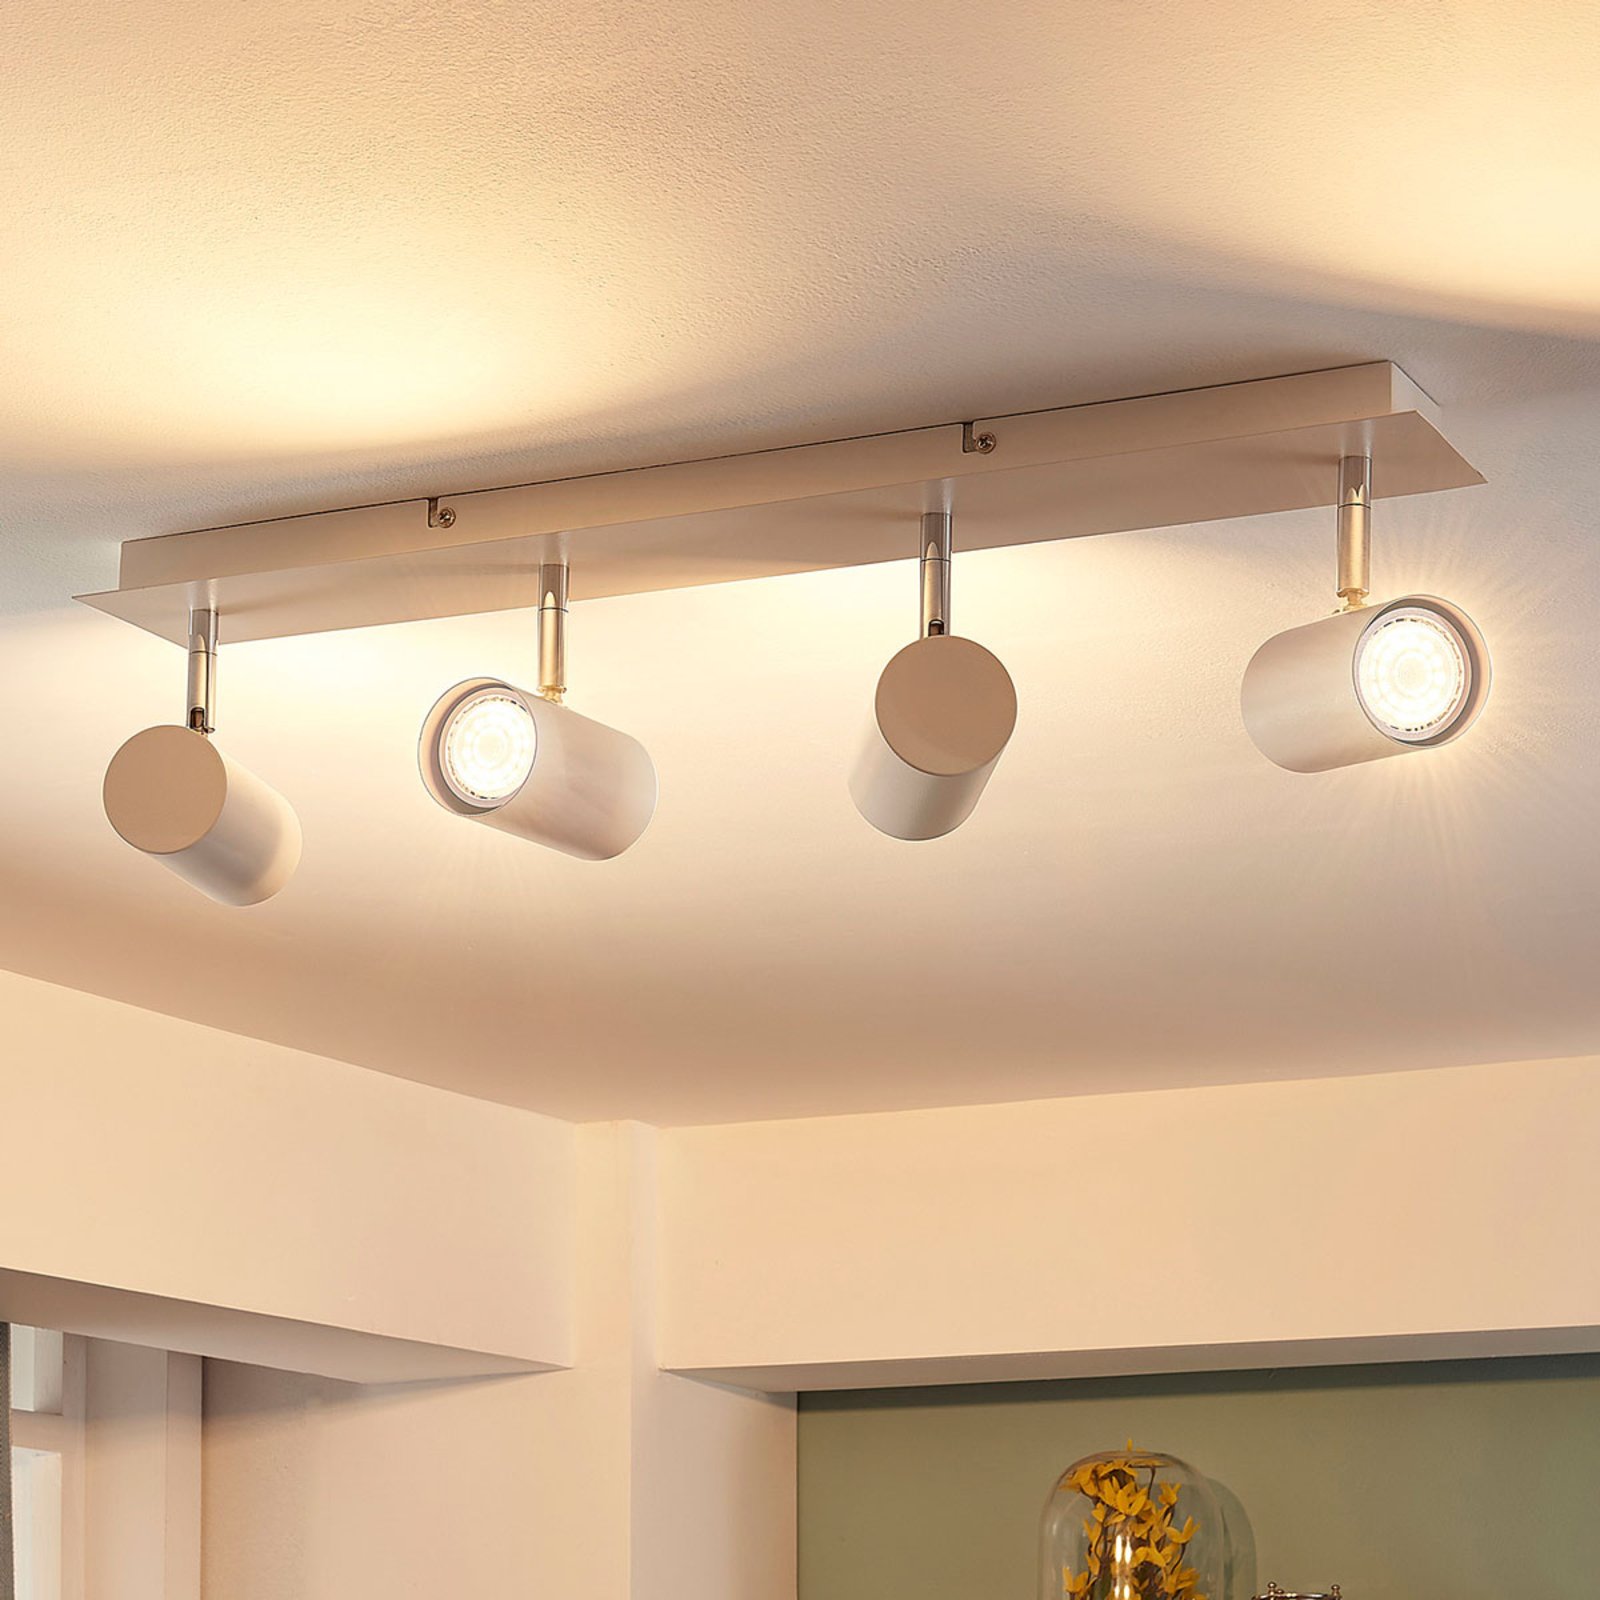 Iluk ceiling spotlight with a white finish, 4-bulb